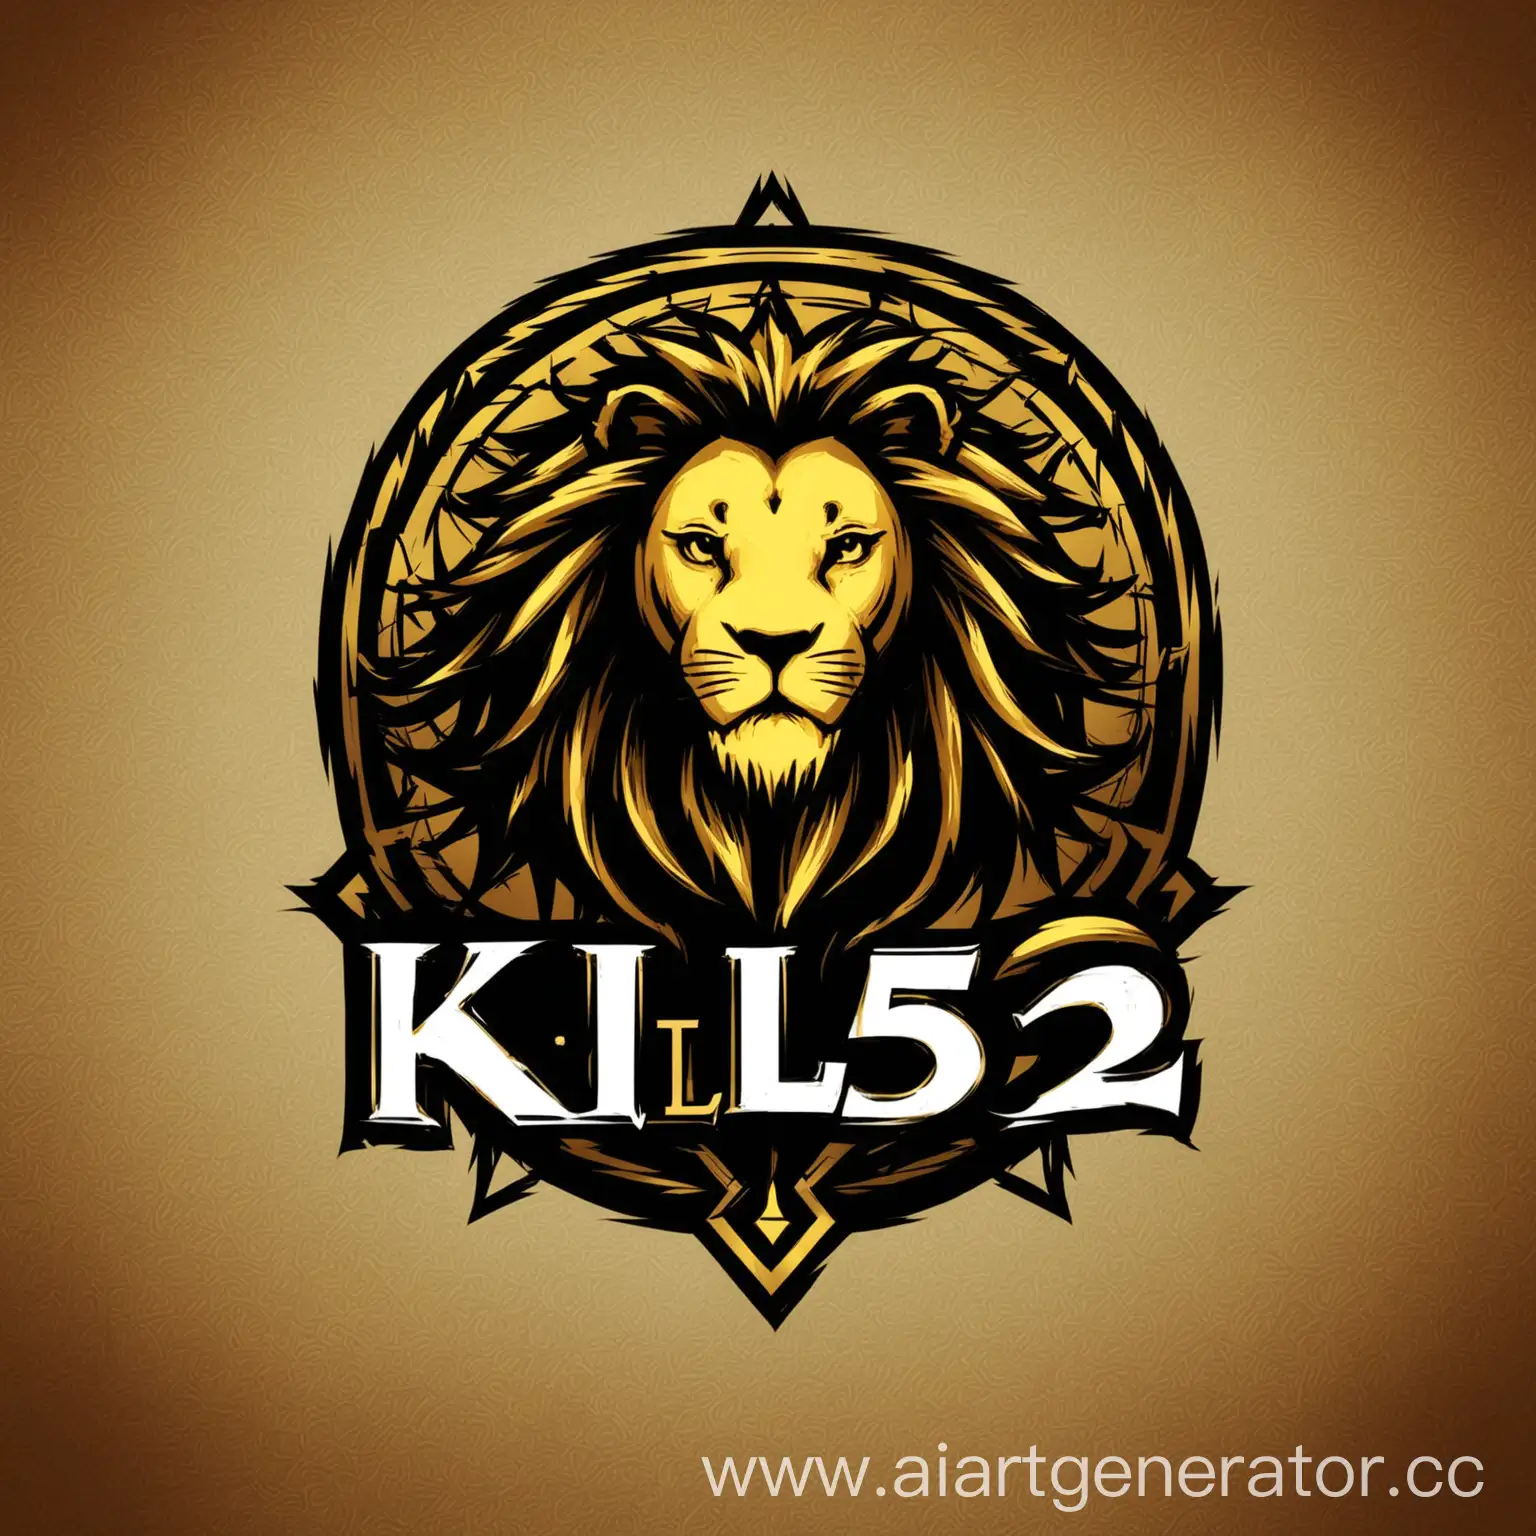 Создай логотип команды «k1l52». Талисманом этого логотипа будет лев